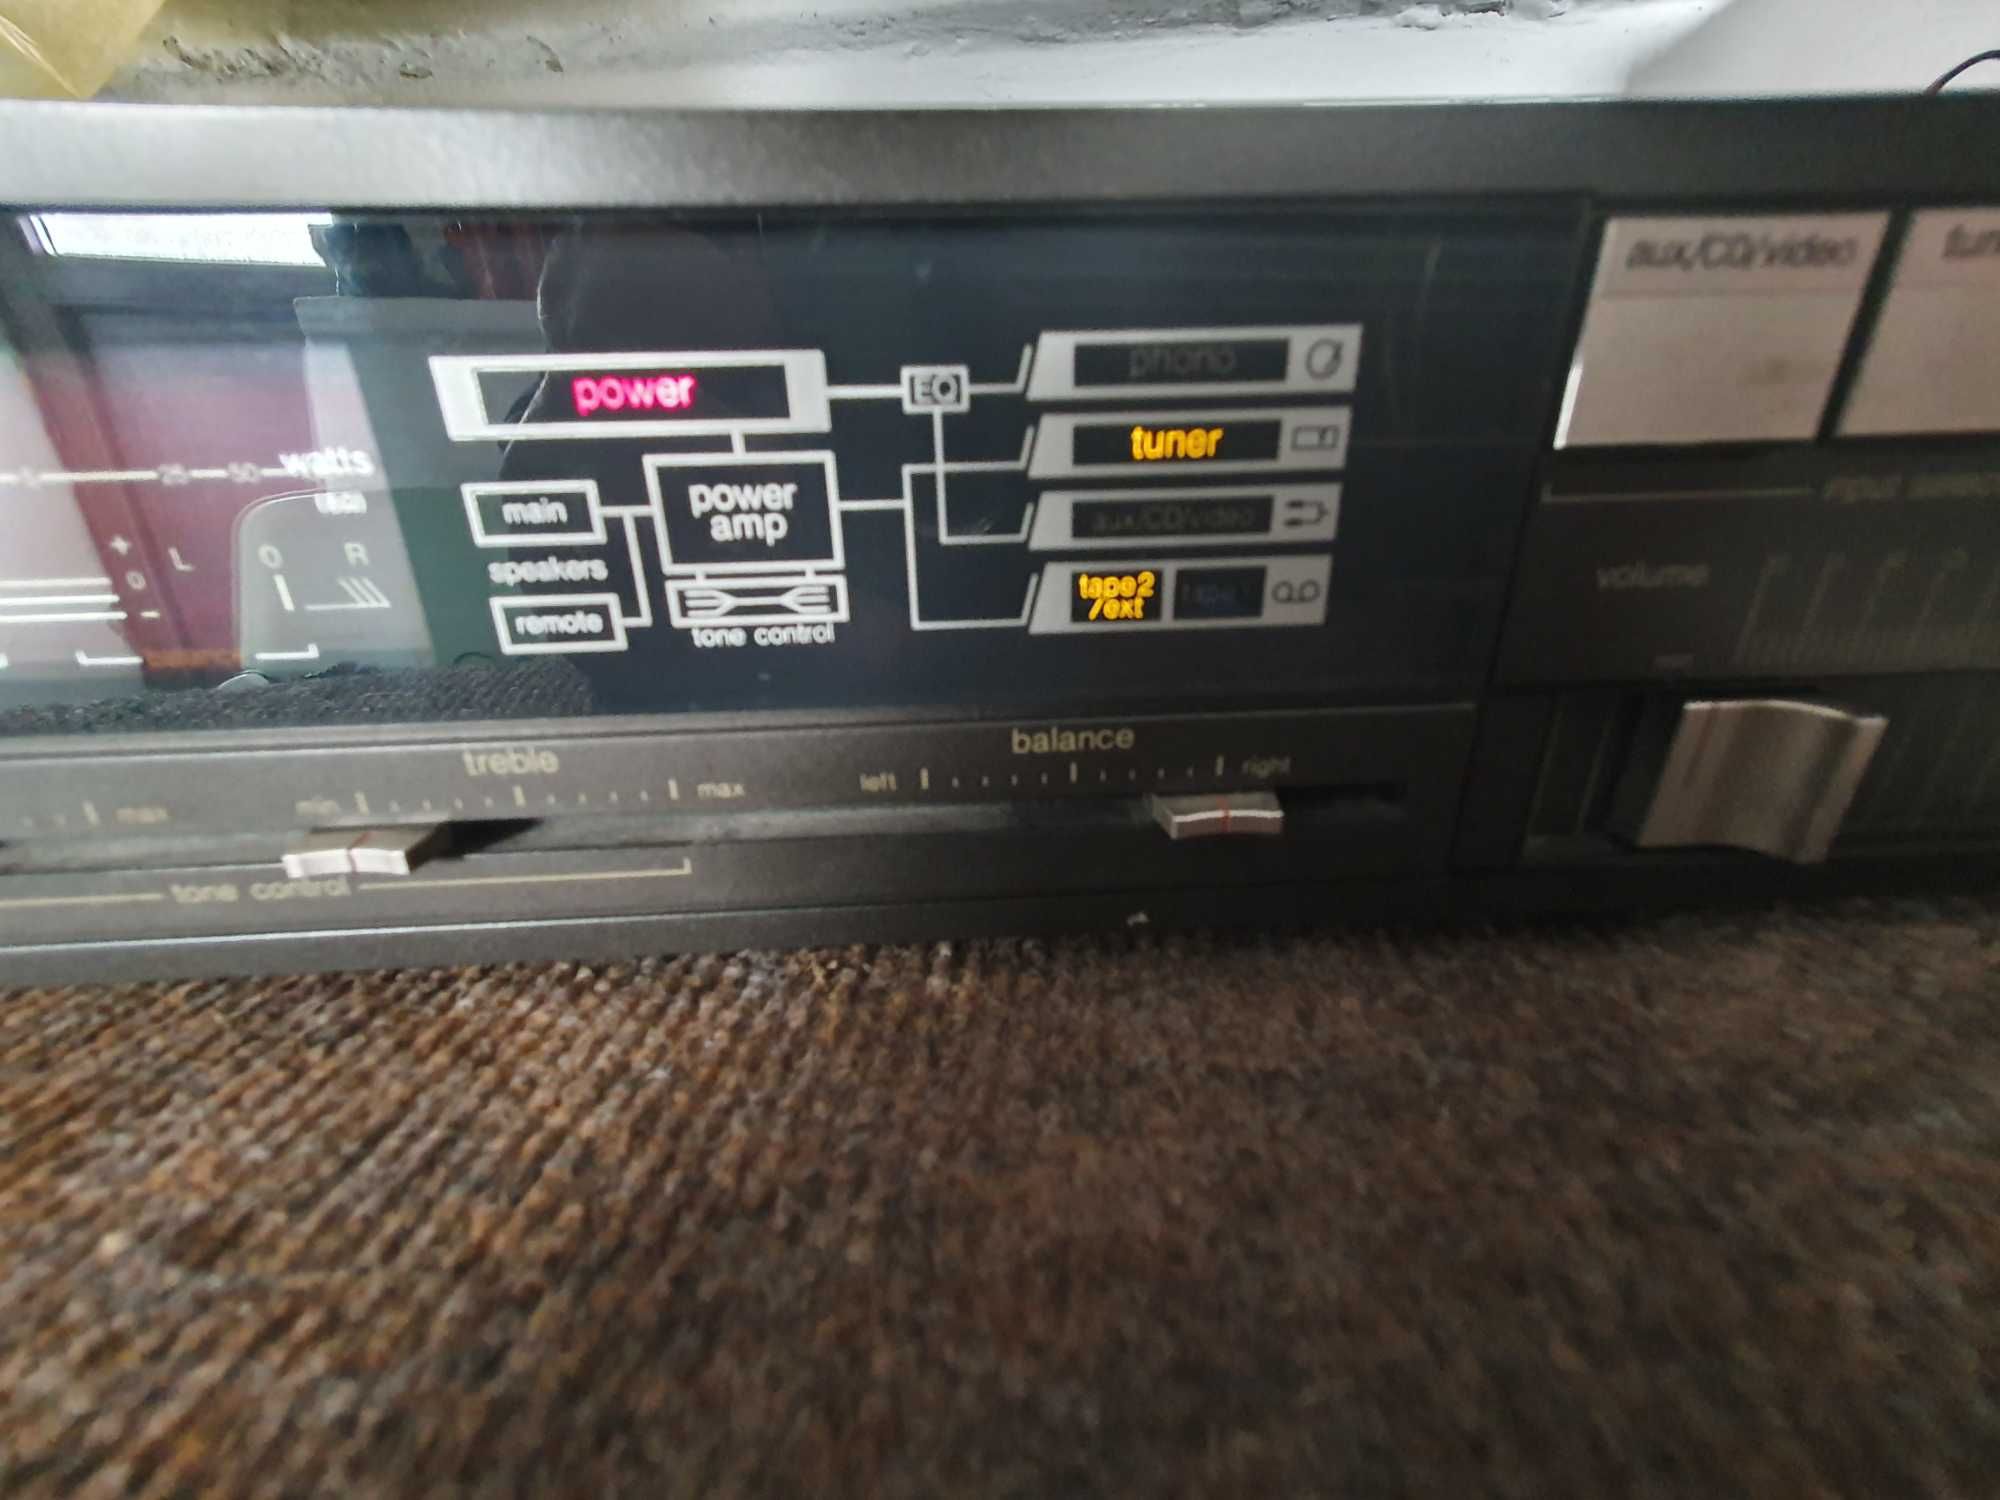 Technics Stereo Integrated Amplifier SU-Z55 Japan!!! 40wat/canal 8ohm